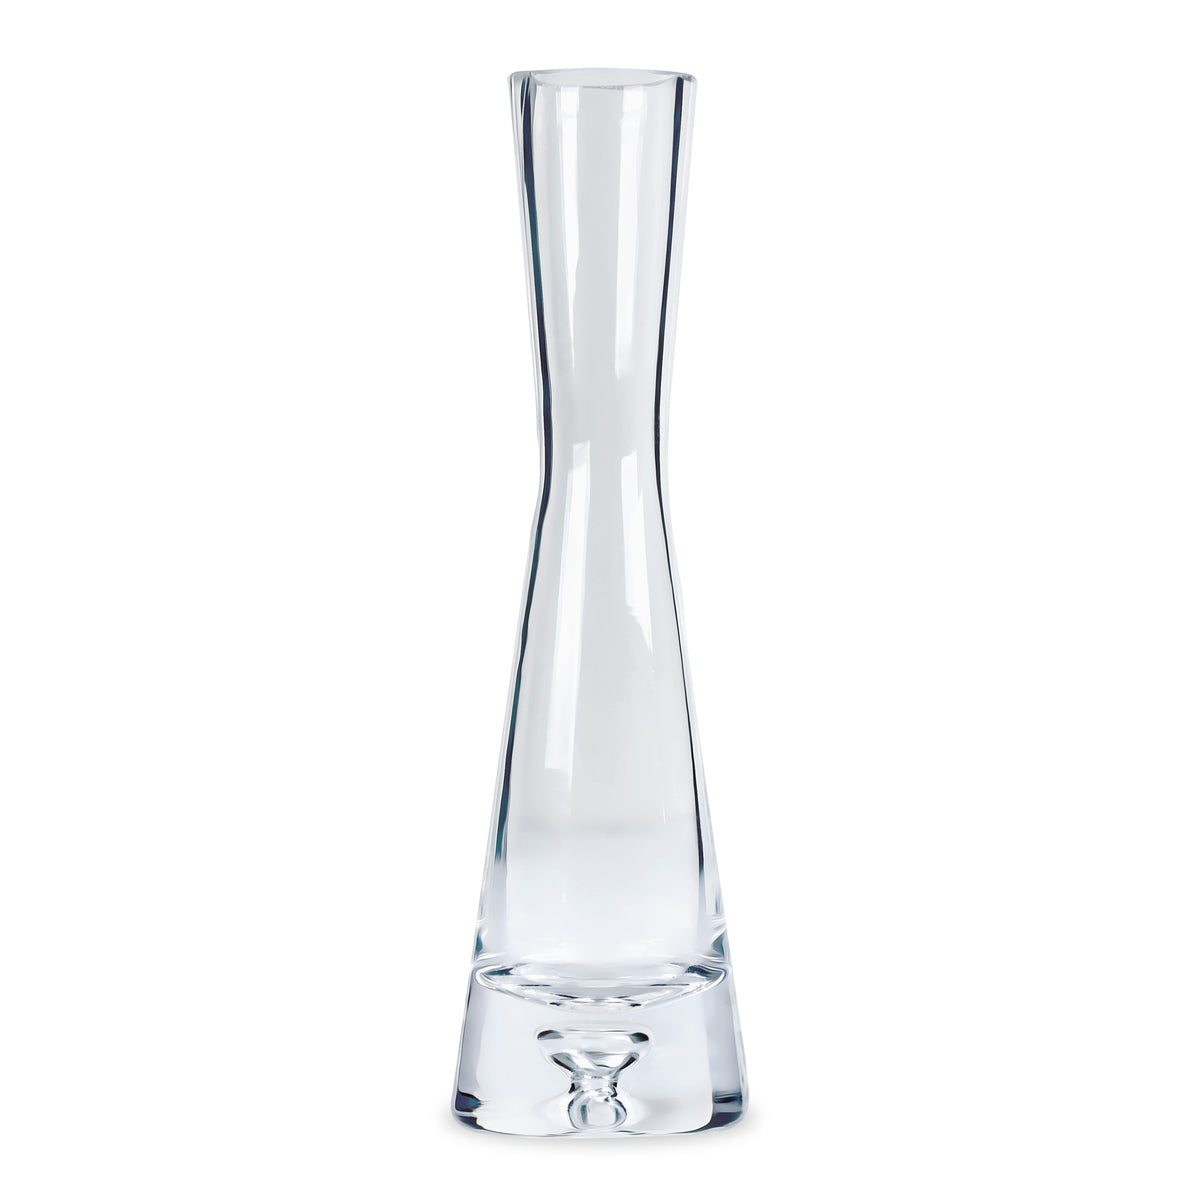 Forever Rose Hourglass Vase (For Trimmed Roses Only)